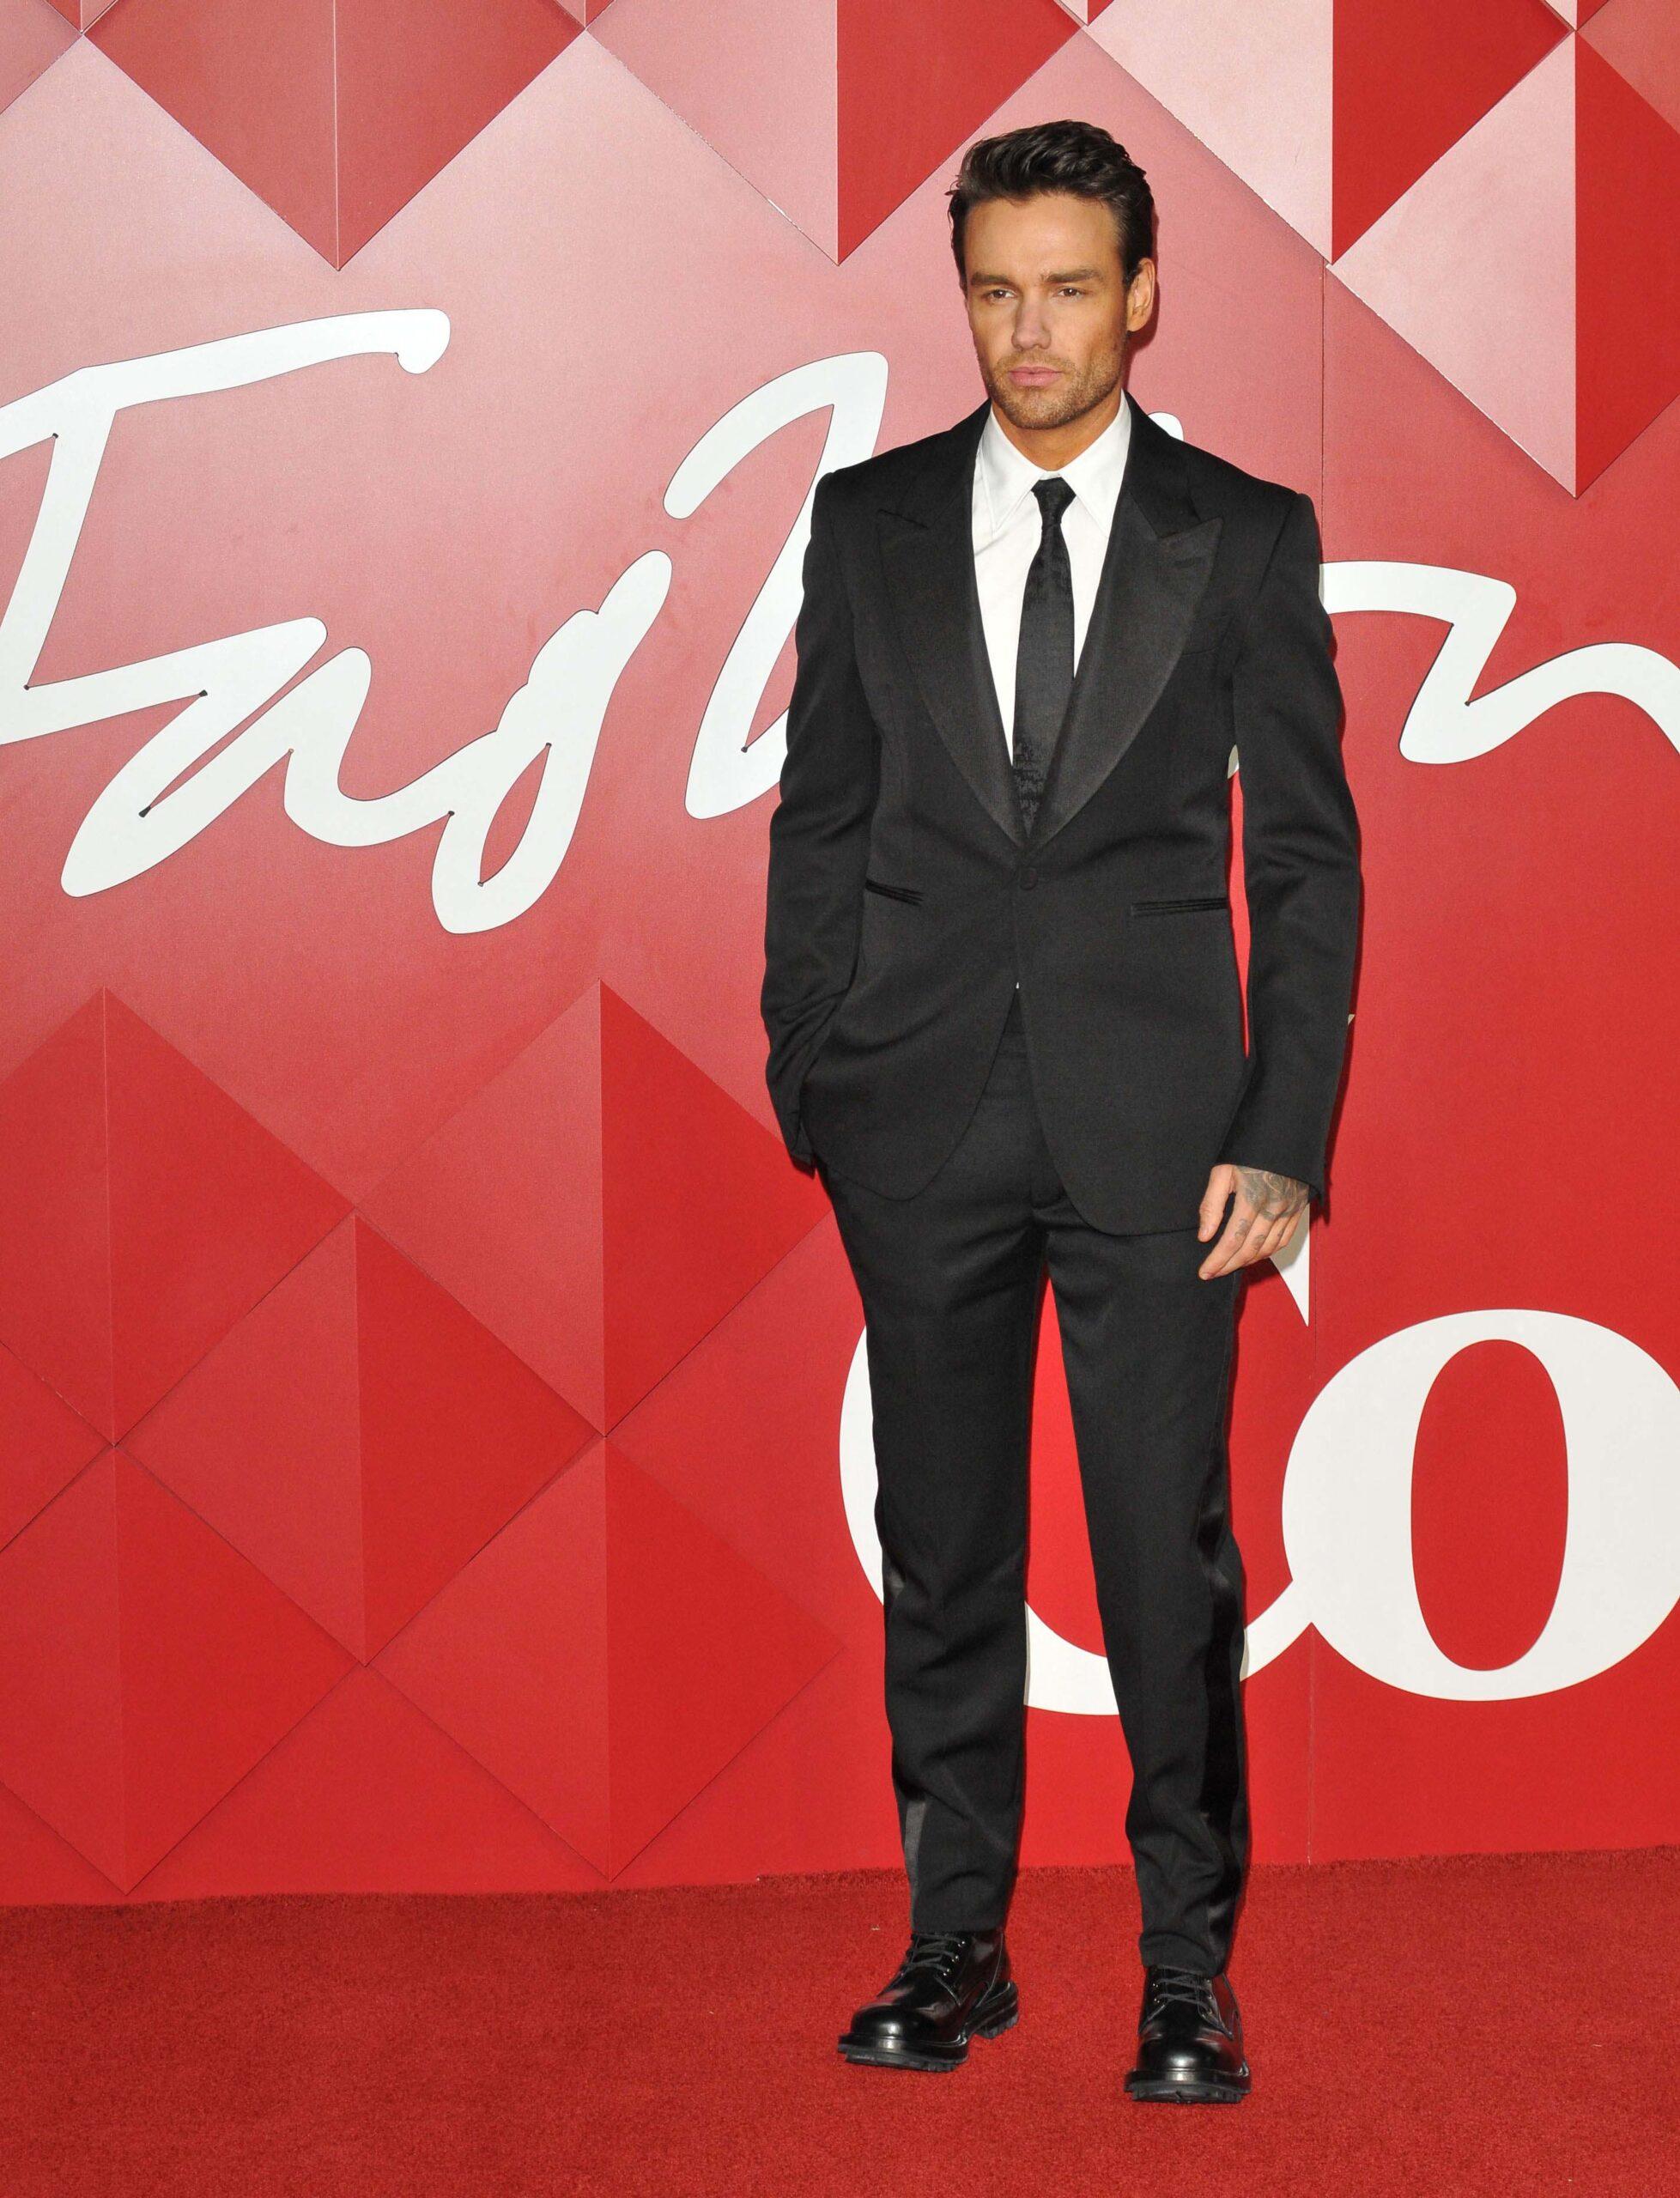 Liam Payne at The Fashion Awards 2022